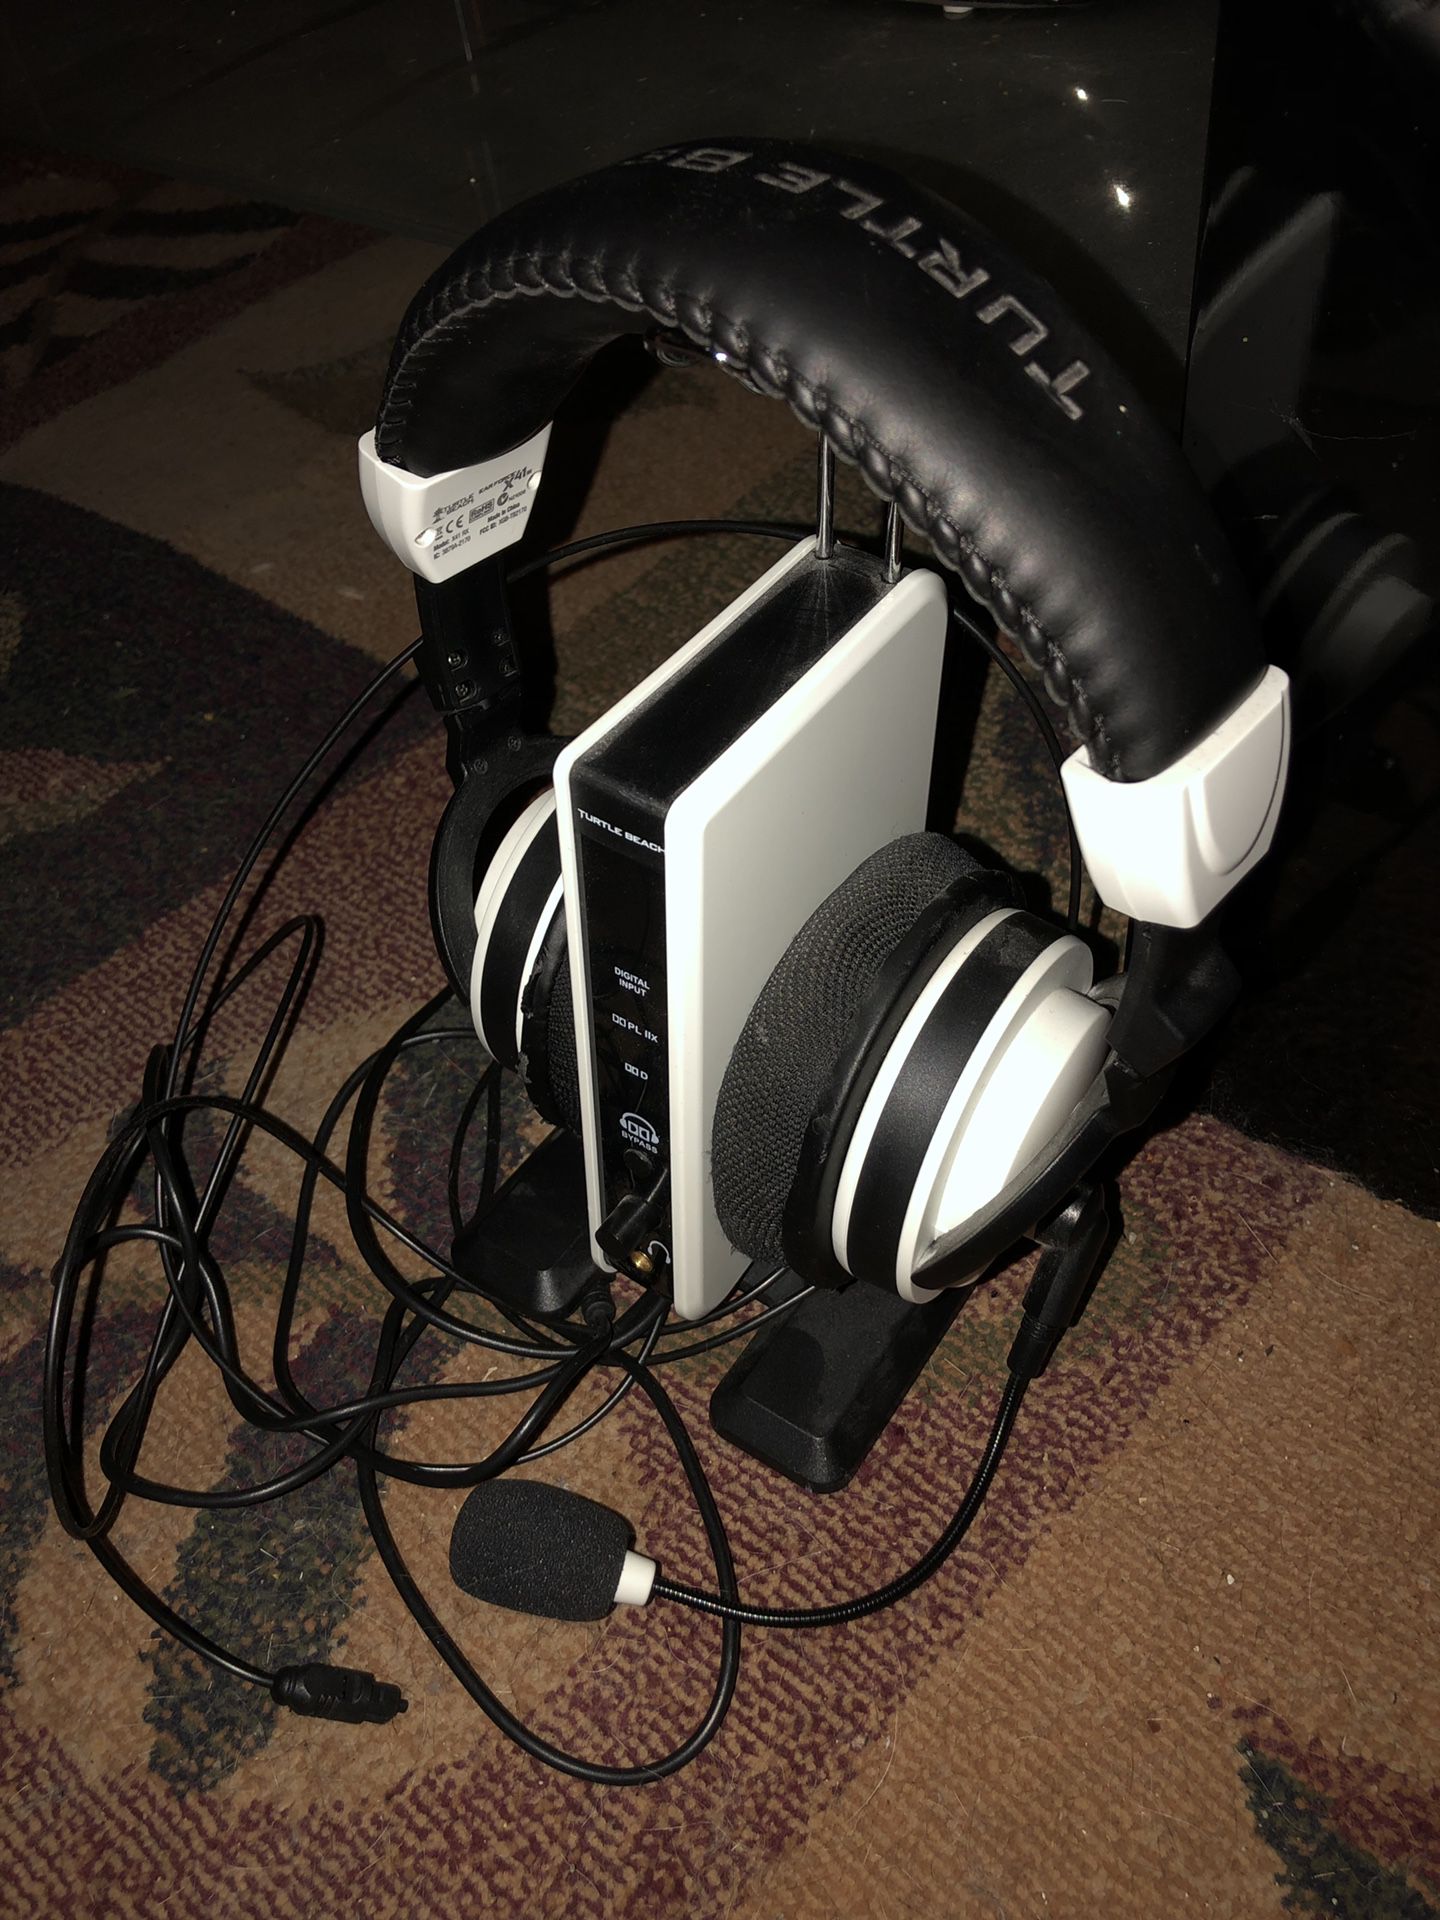 Turtle Beach EarForce x41 gaming headphones